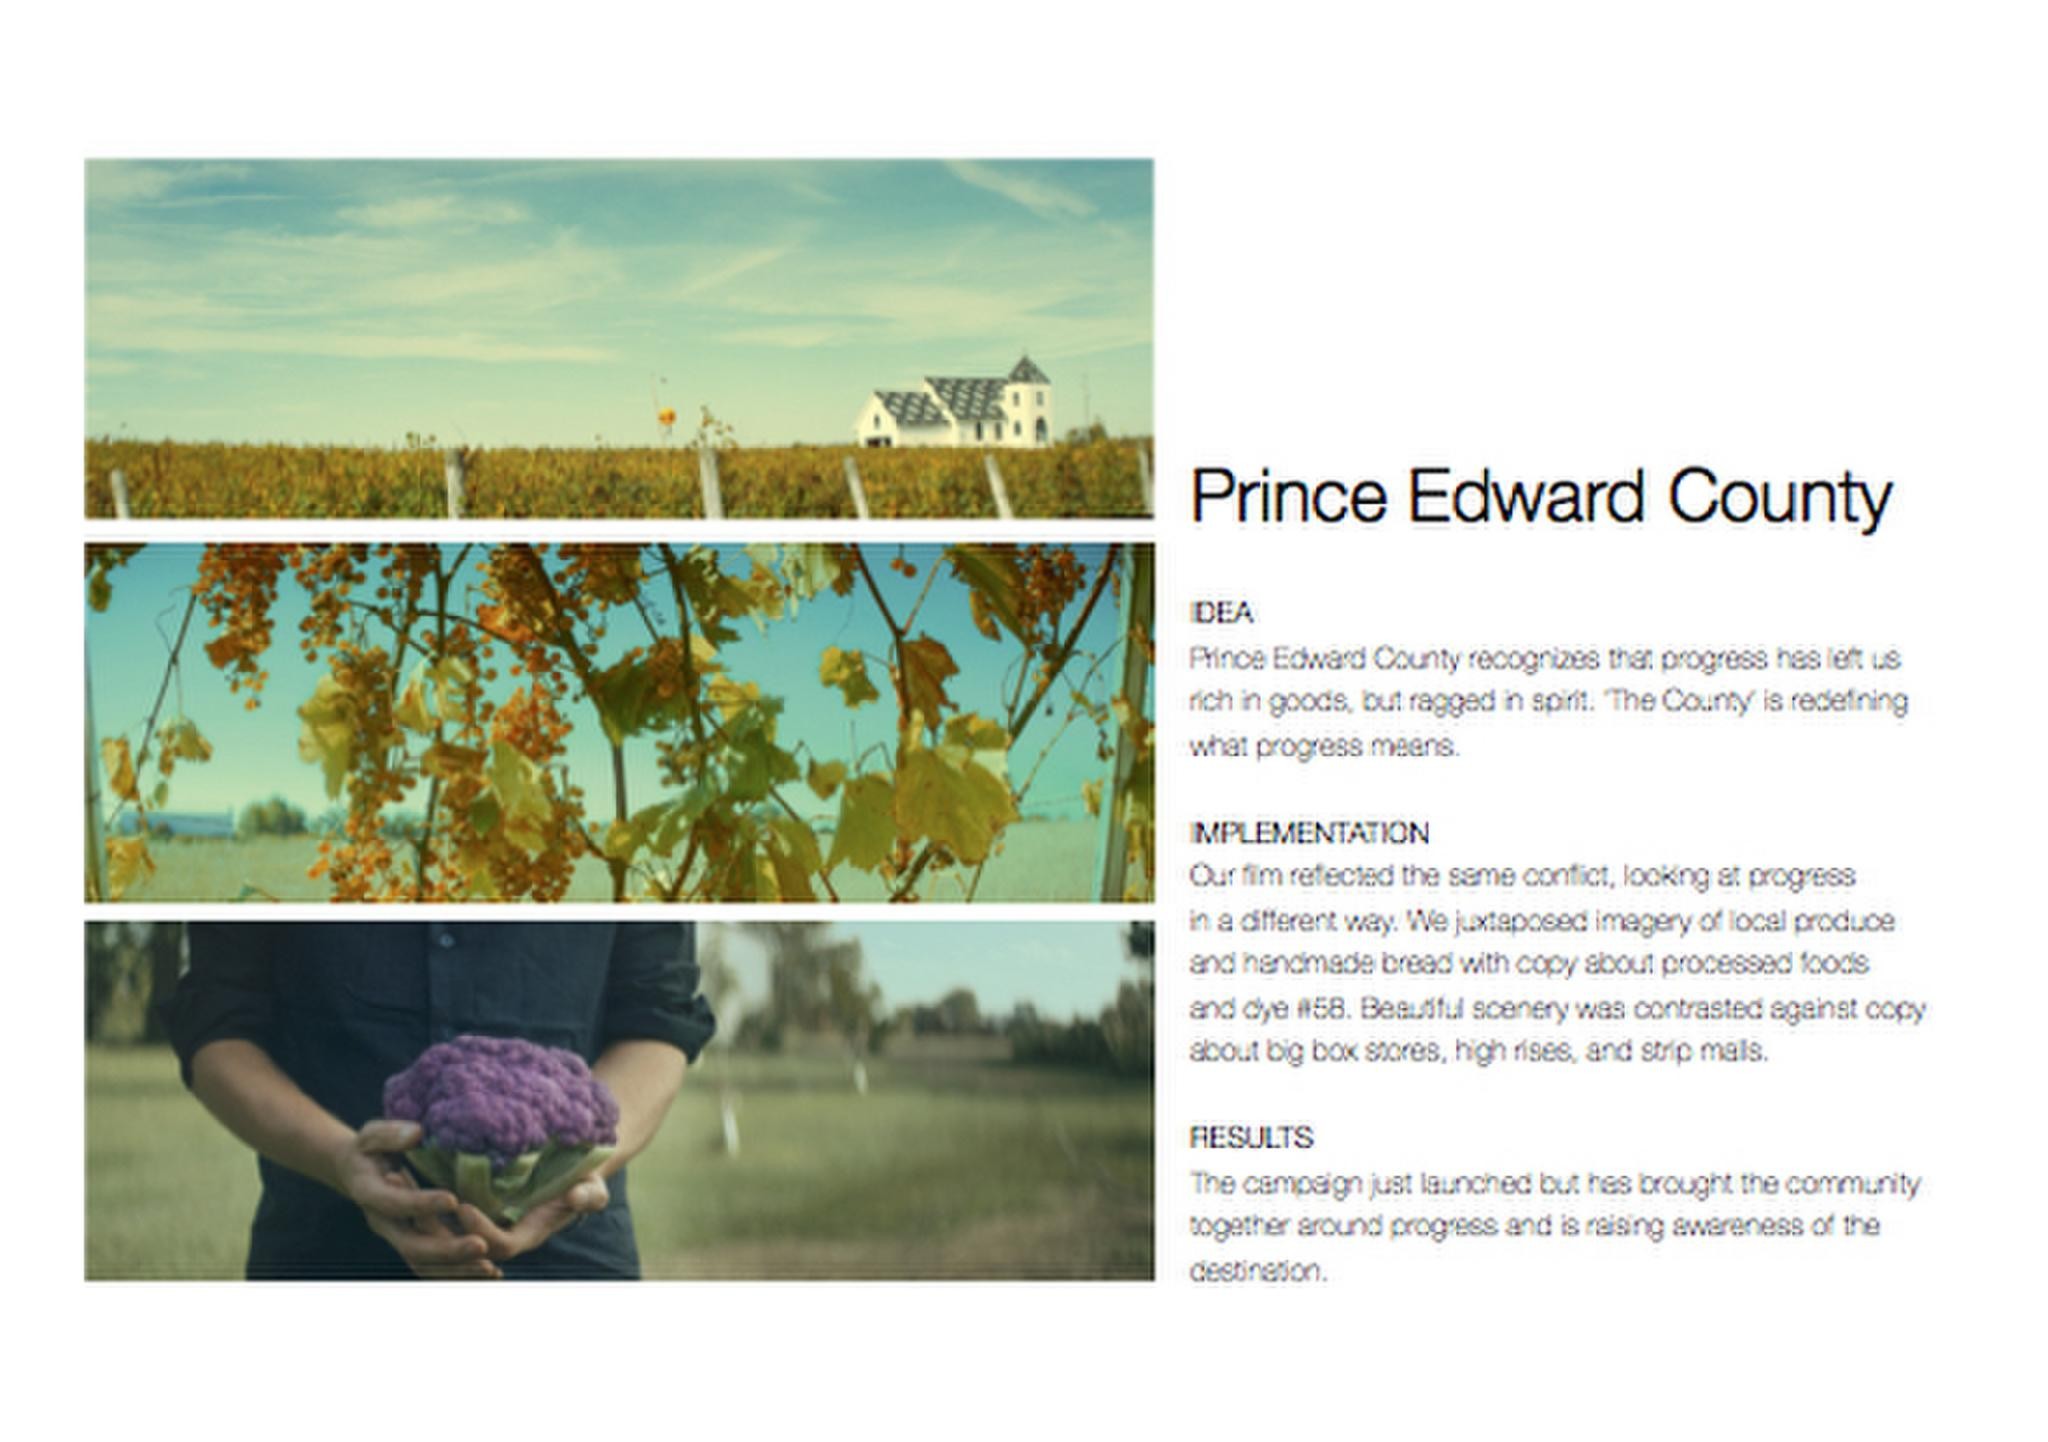 PRINCE EDWARD COUNTY